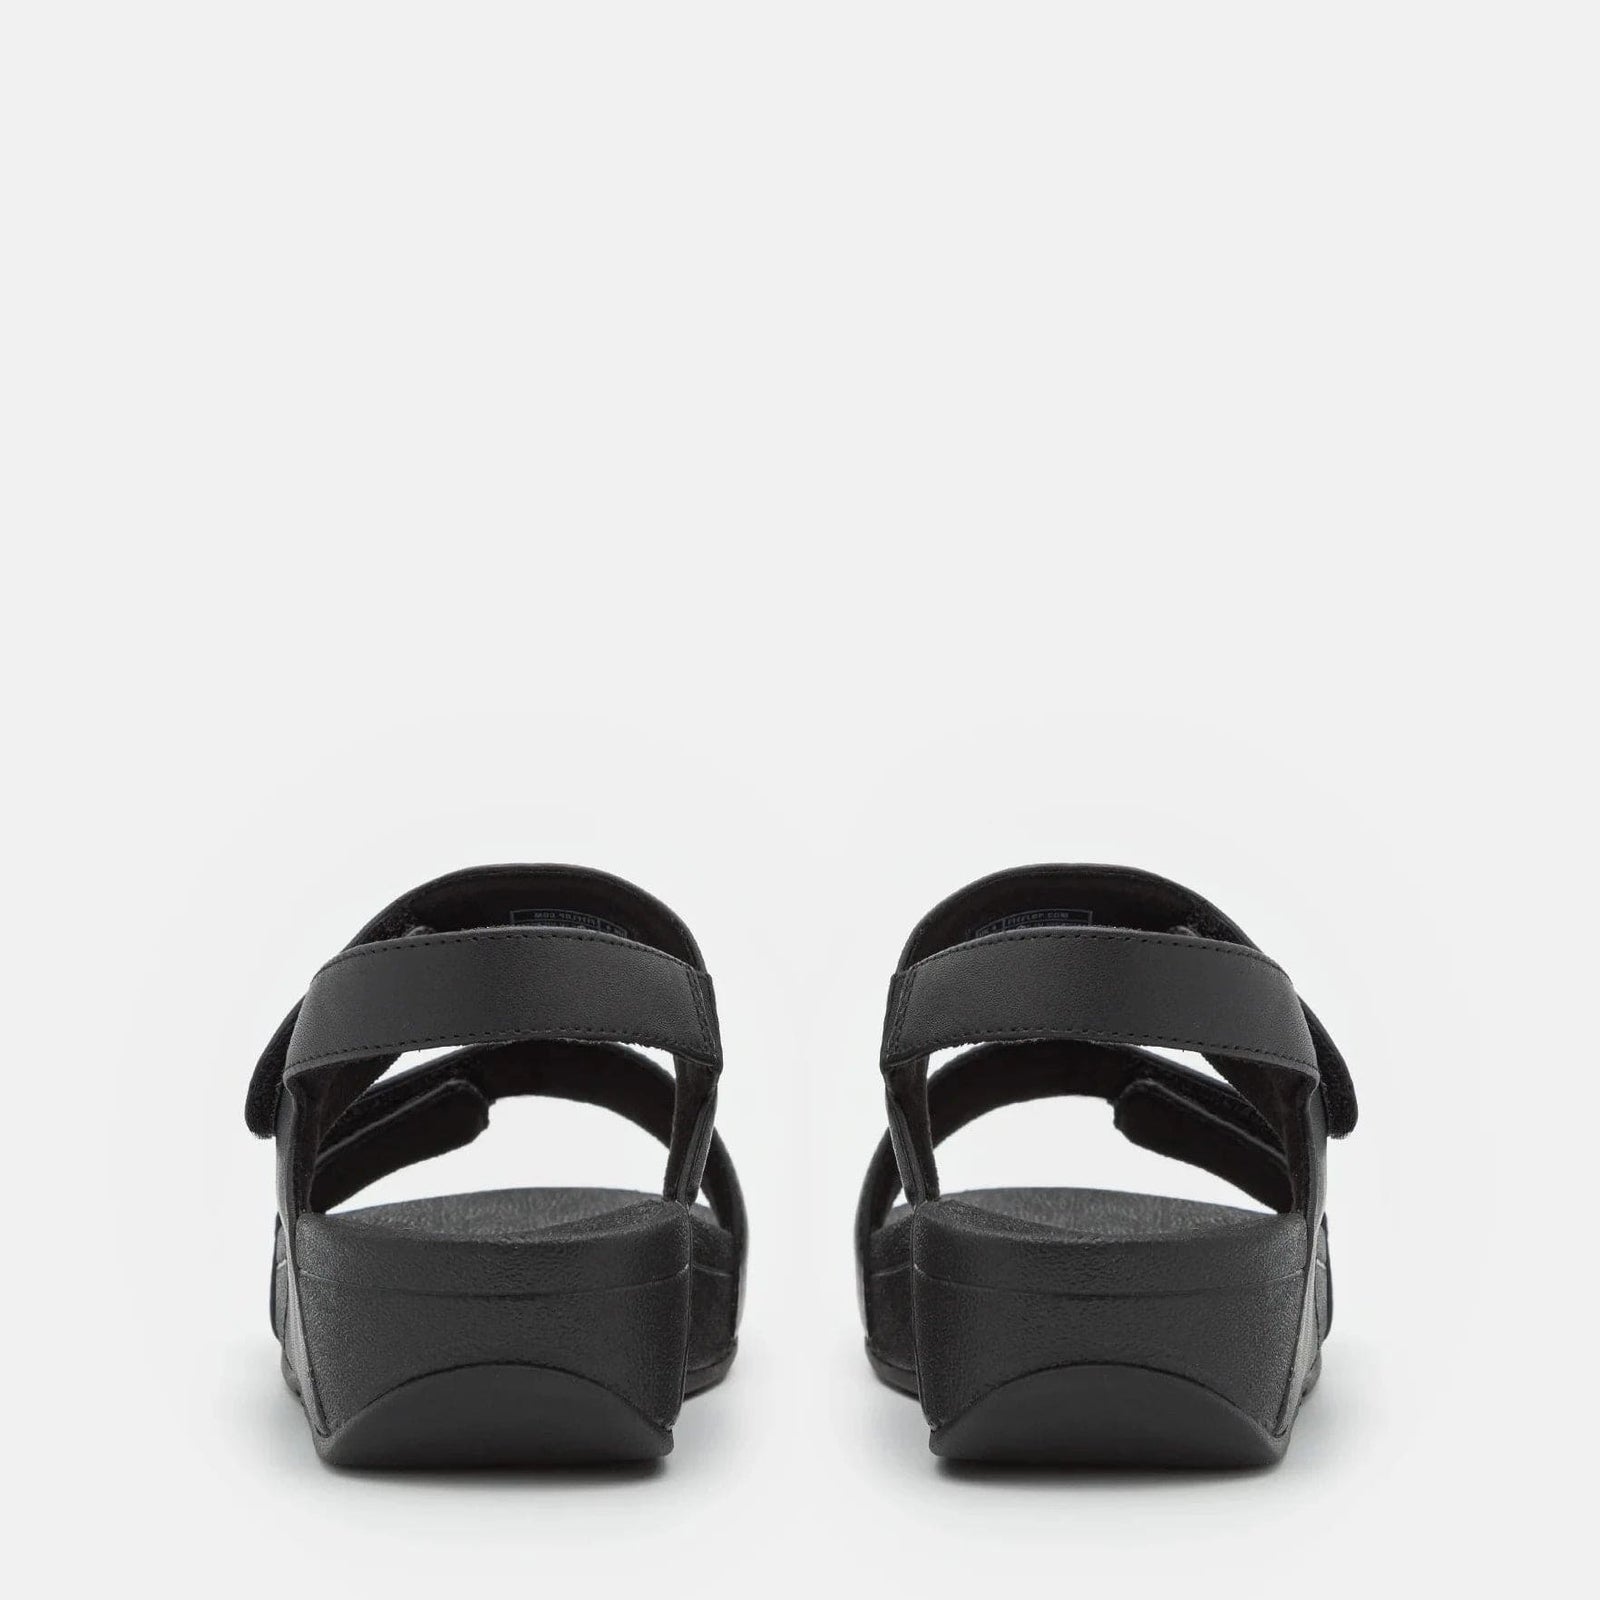 FitFlop LuLu Adjustable Leather Sandals Black